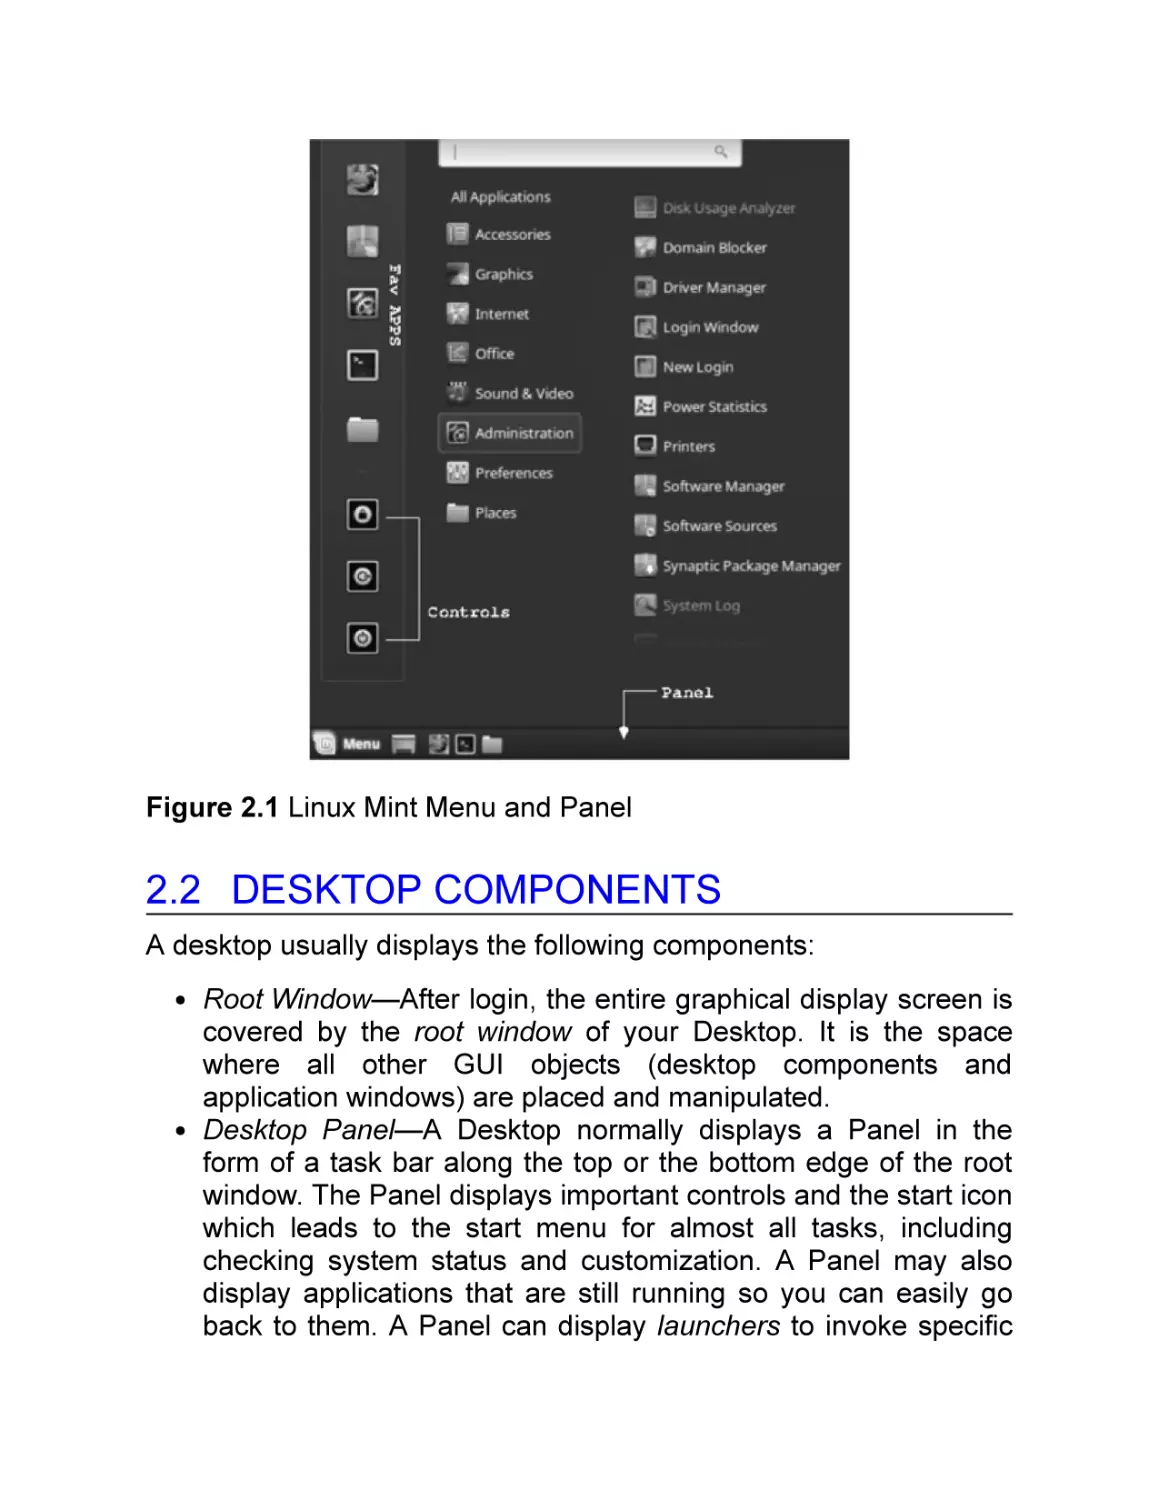 2.2 Desktop Components